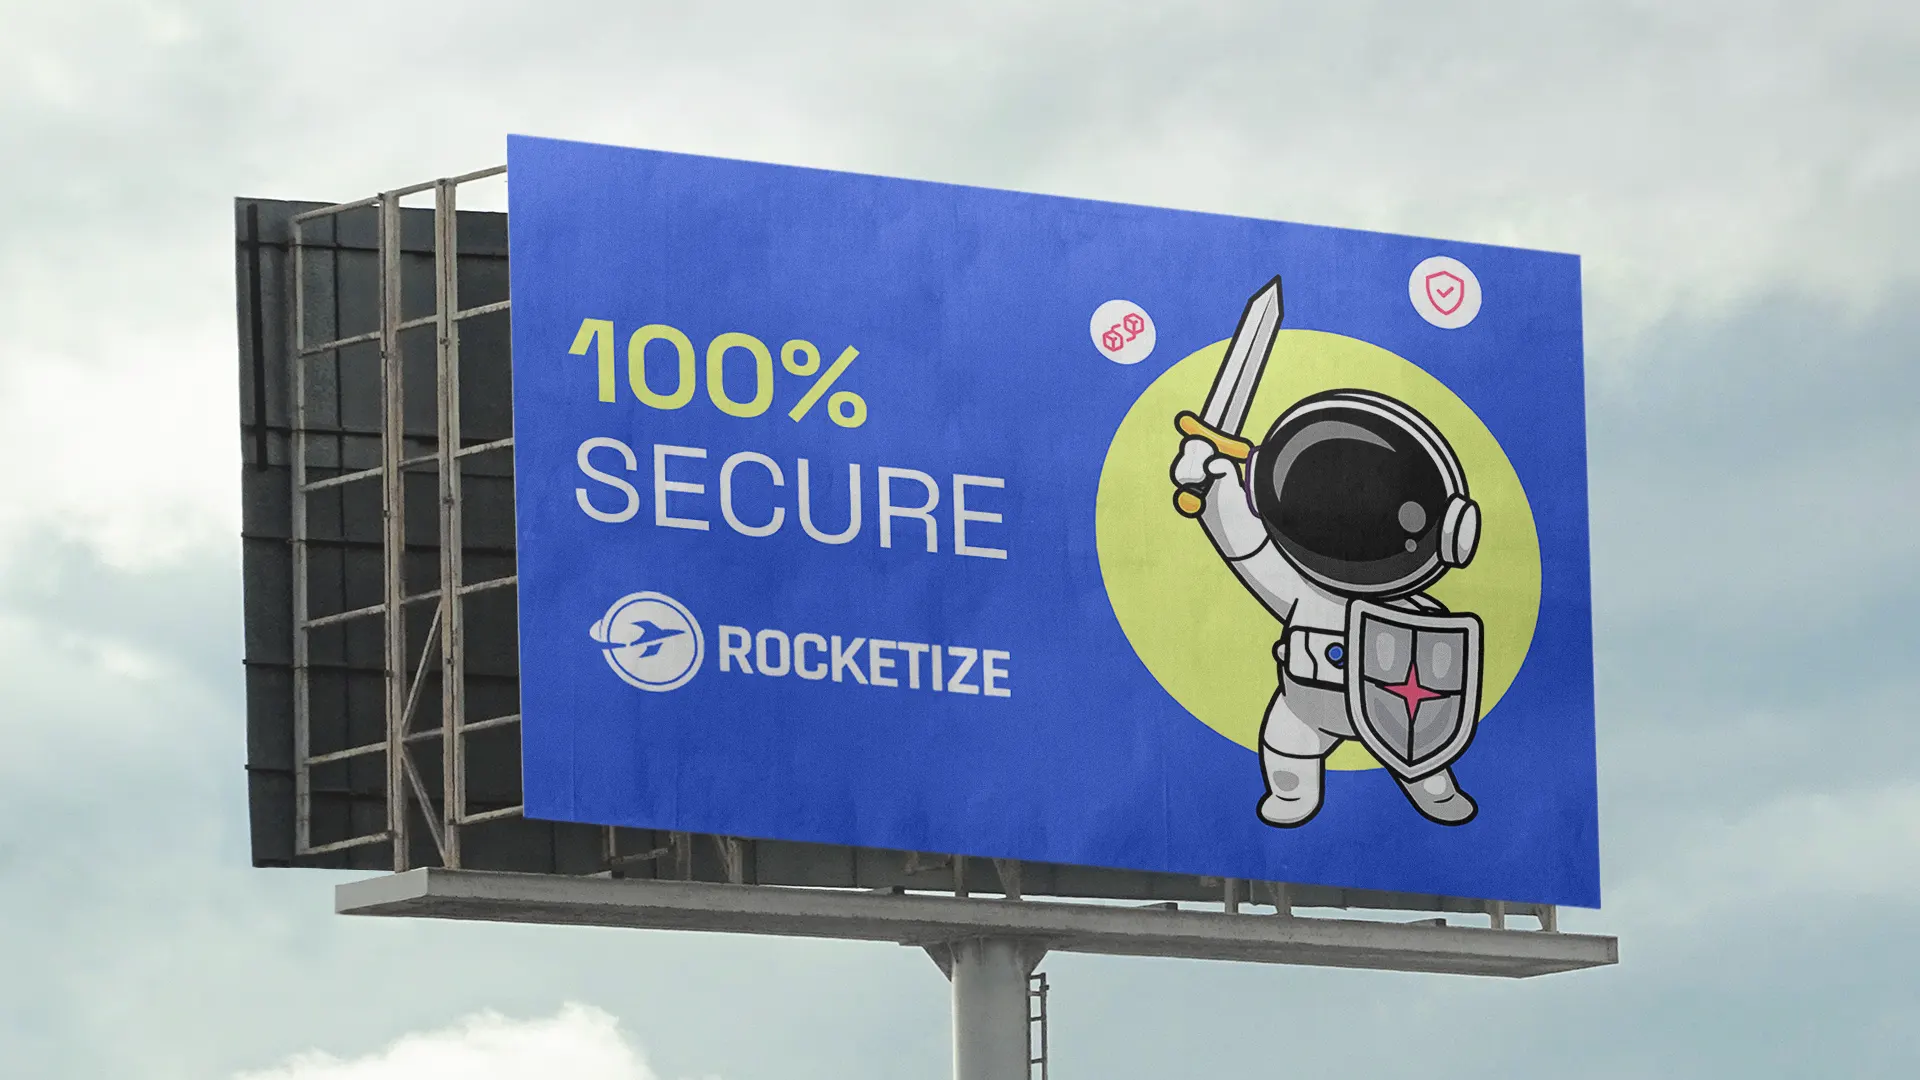 Rocketize token